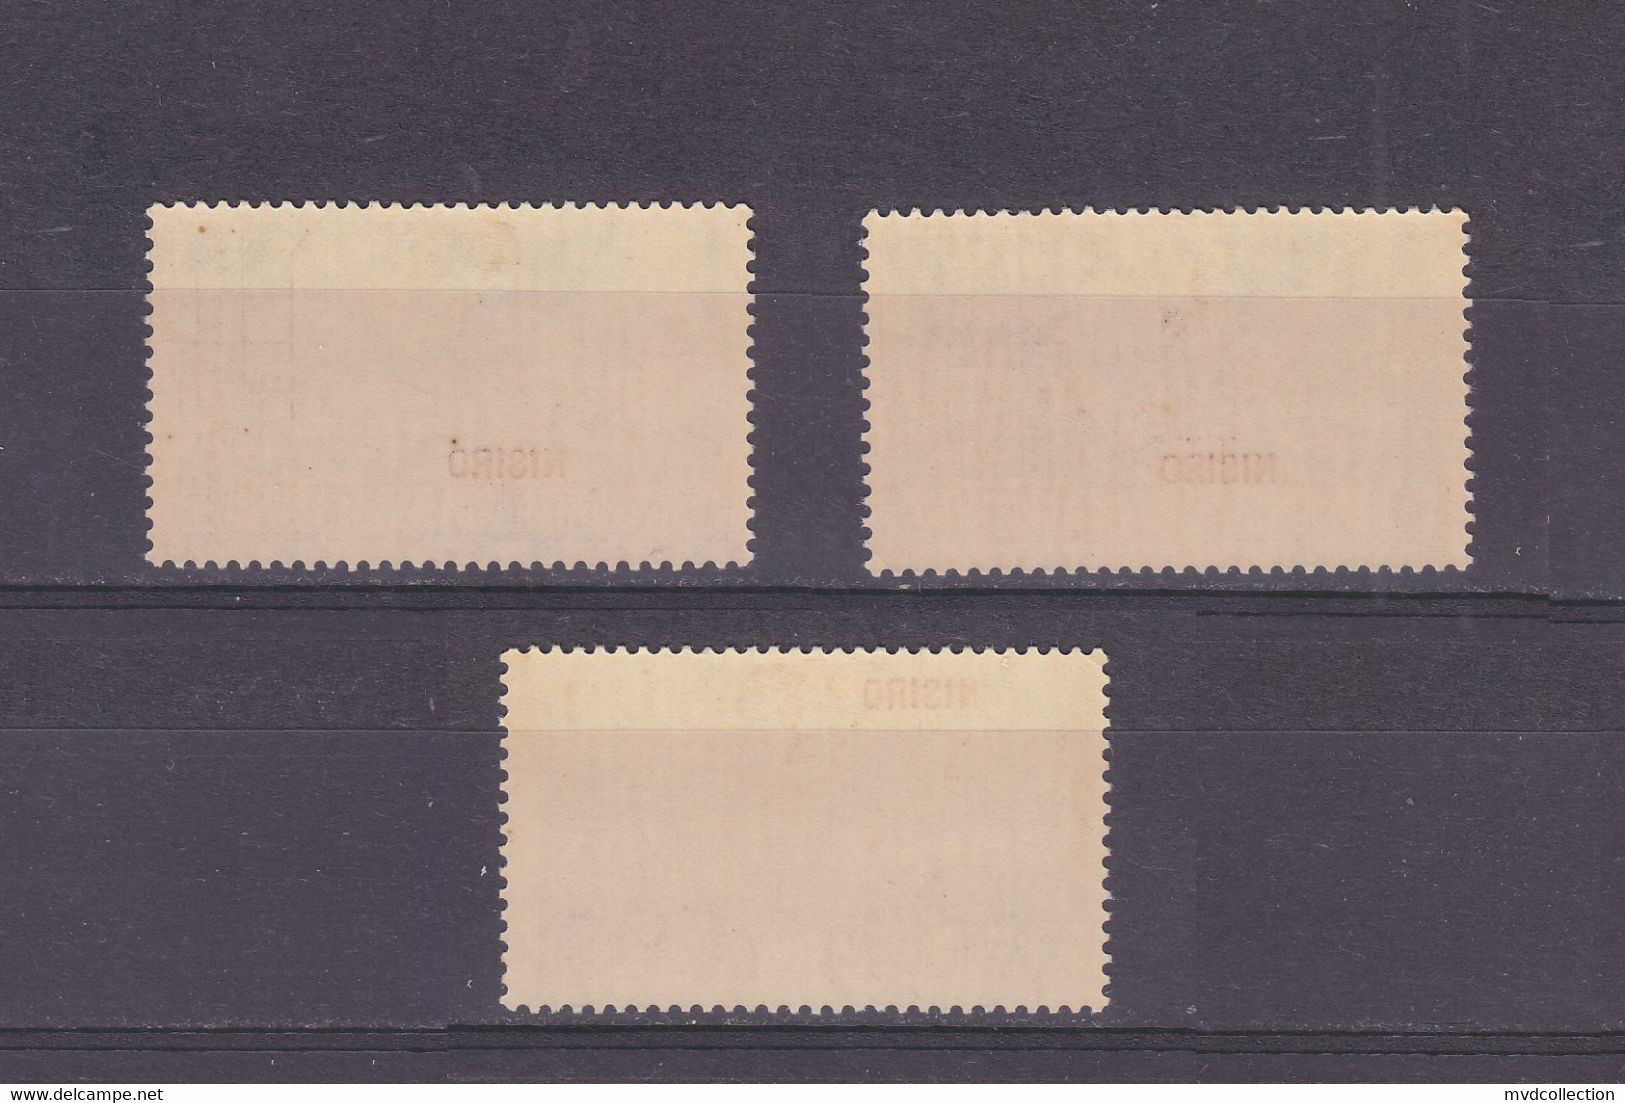 ITALY Lot CENTENARIO FERRUCCI Stamps Overprinted NISIRO 1930 VF MH Original Gum - Ägäis (Nisiro)